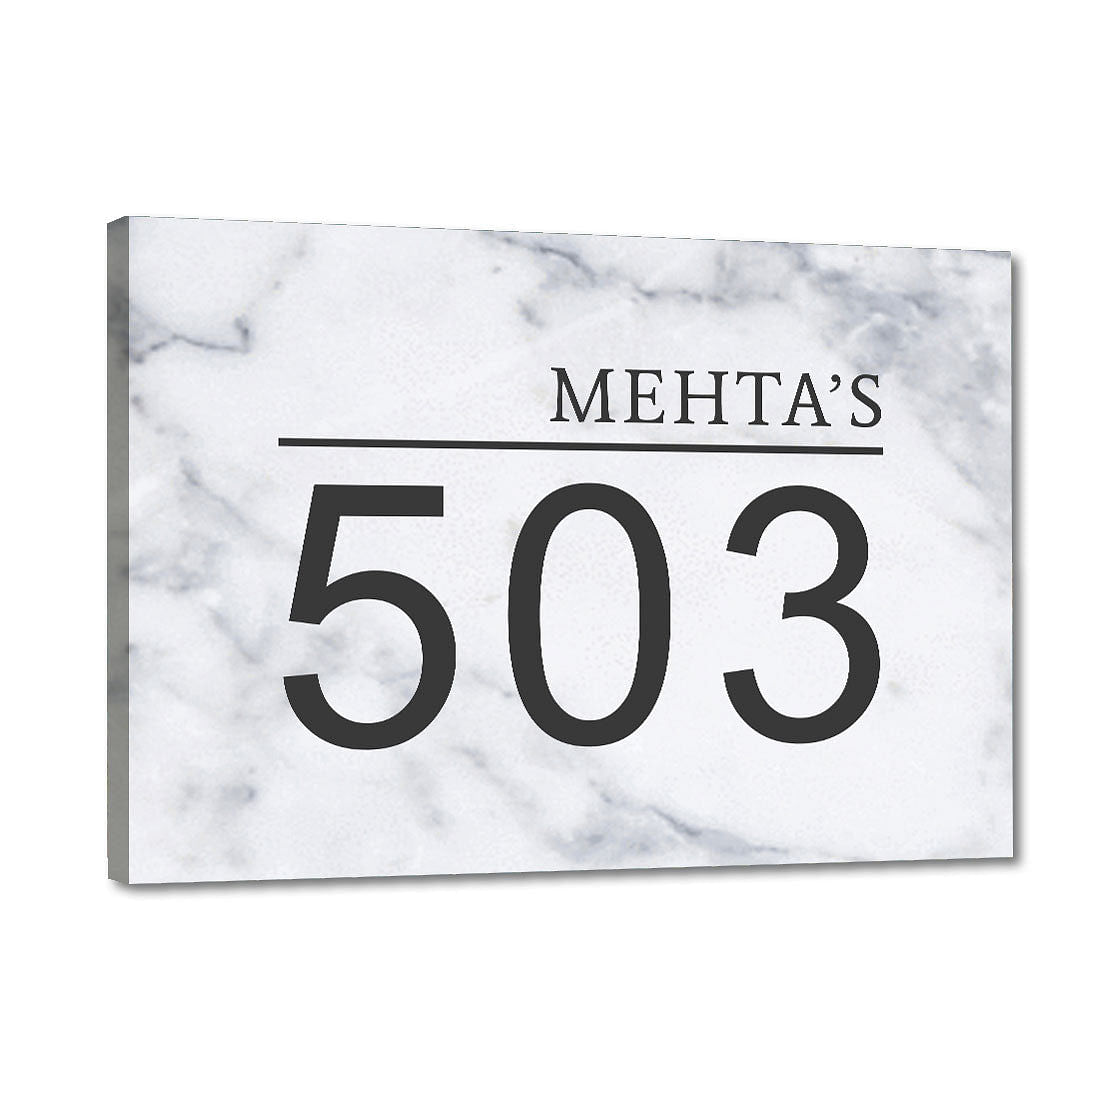 Customized Elegant Name Plate for Door - White Classic Nutcase